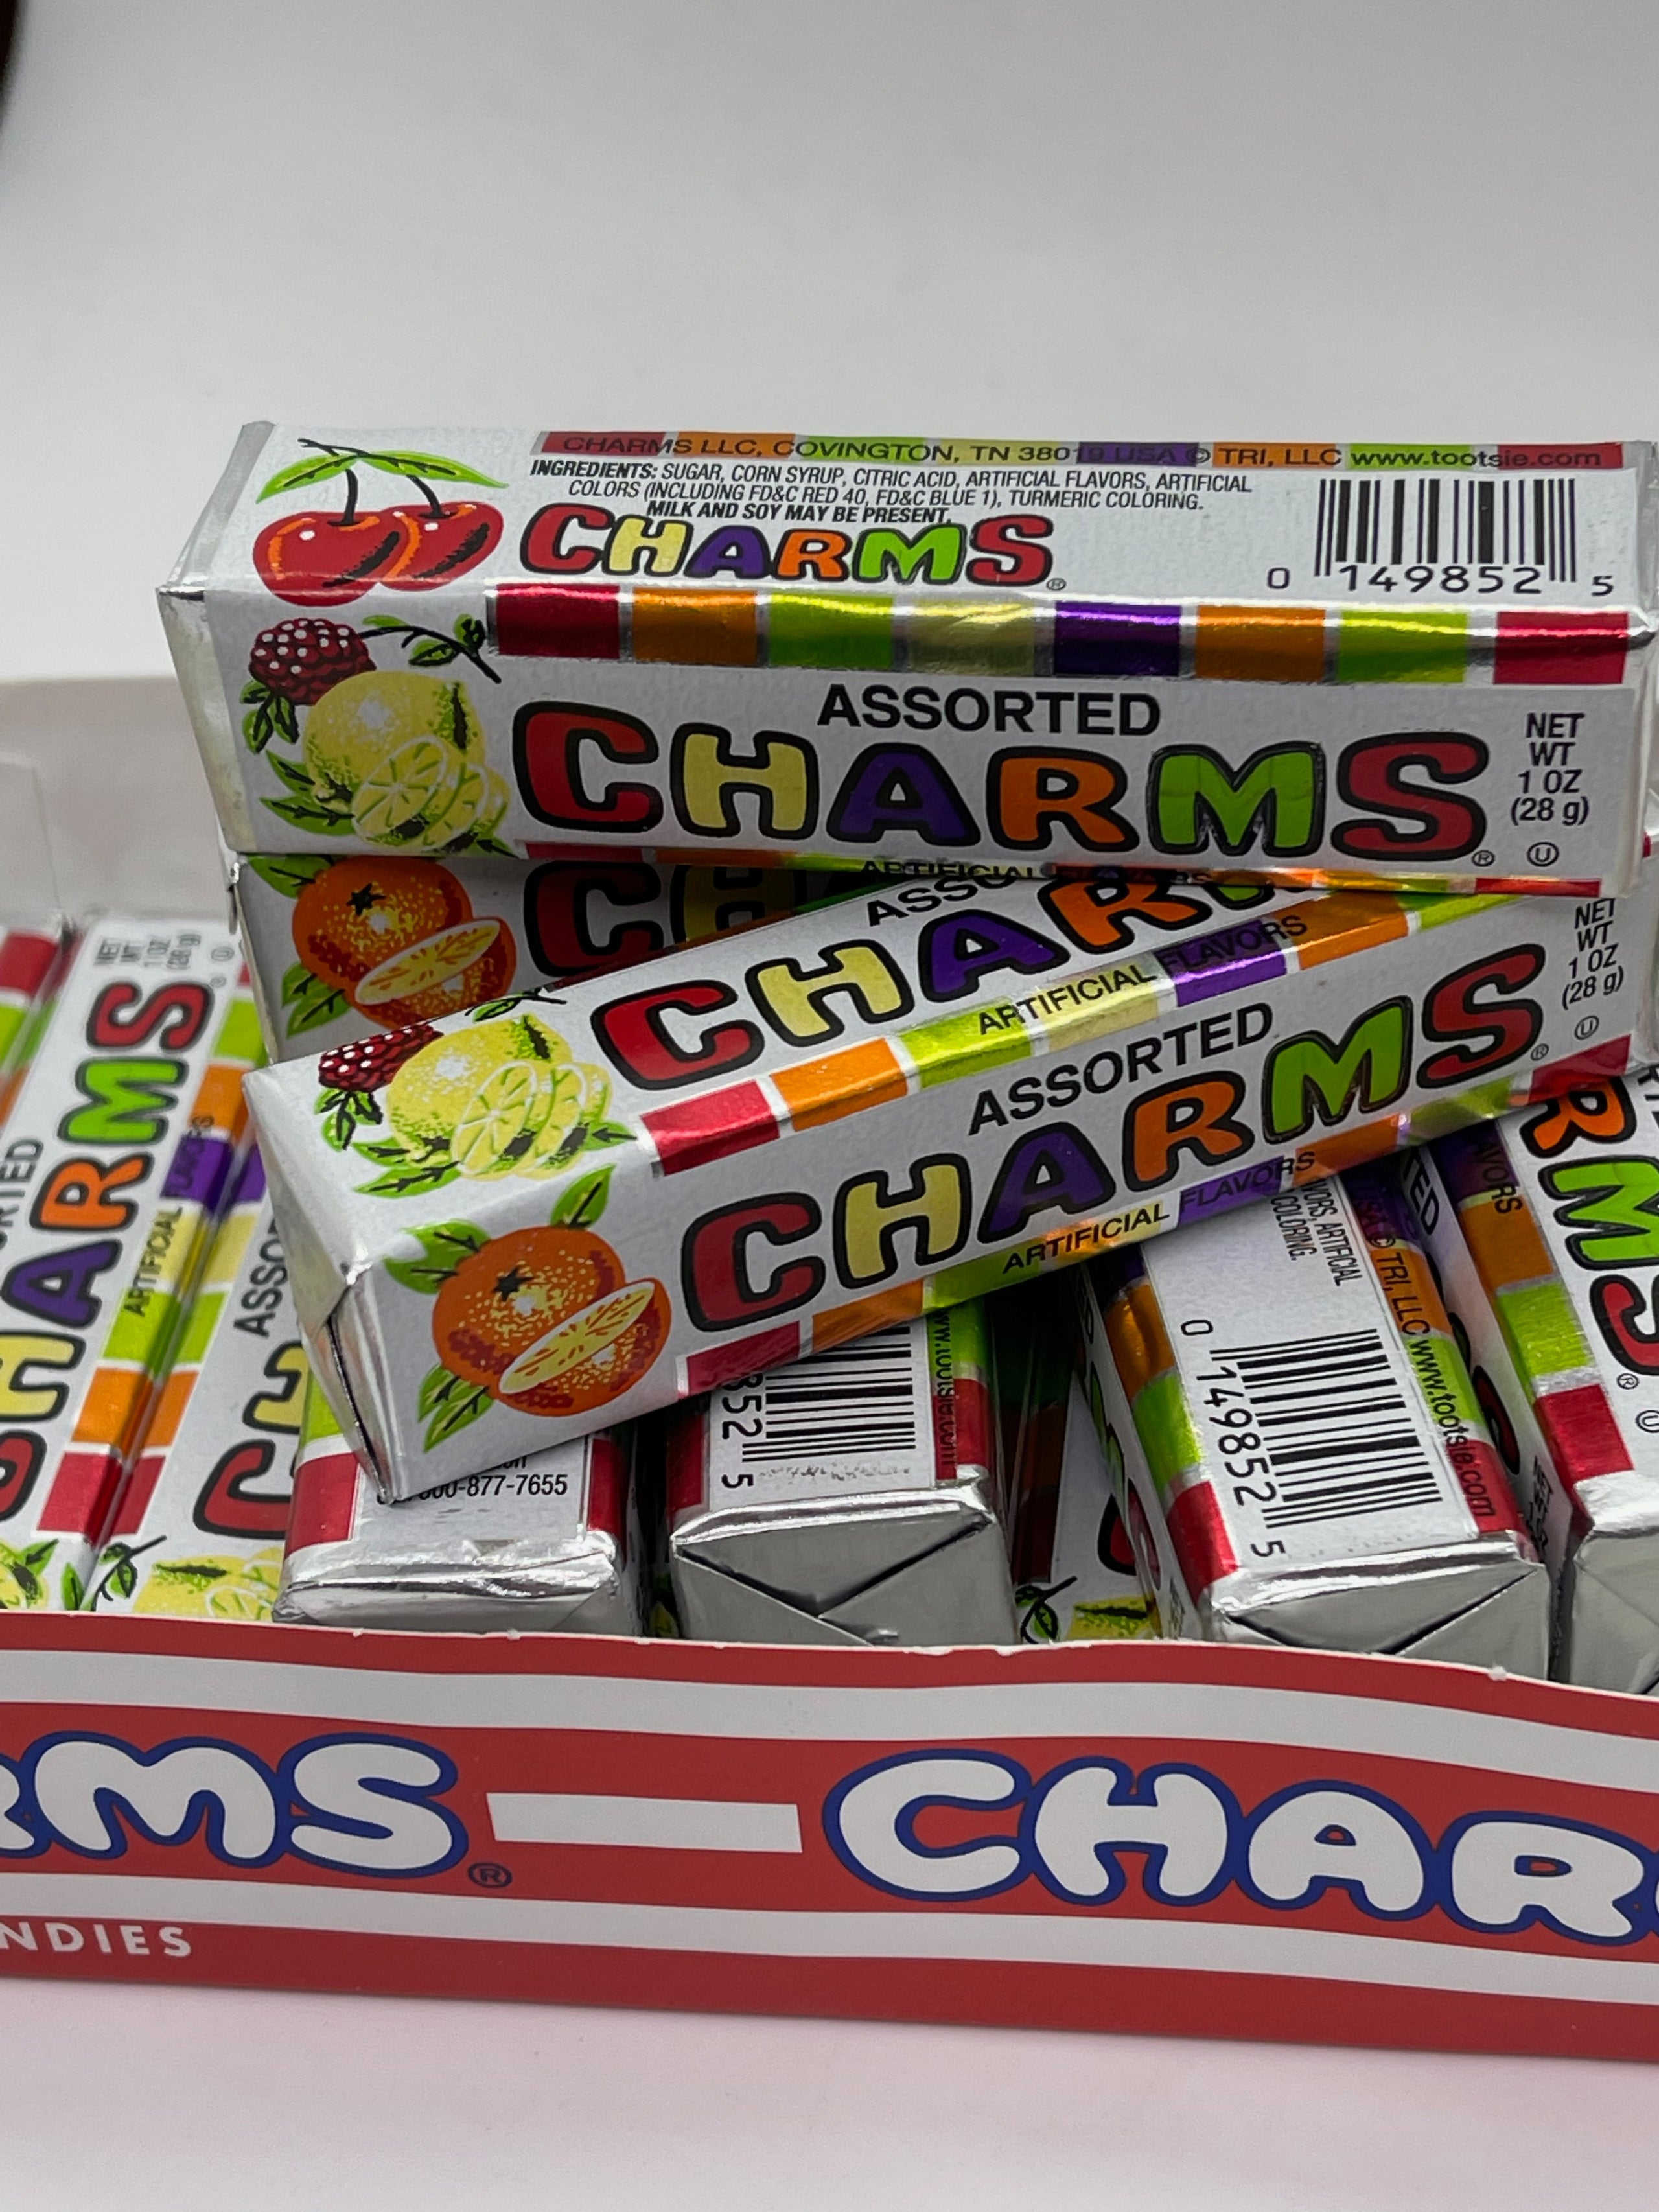 Charms hard candies